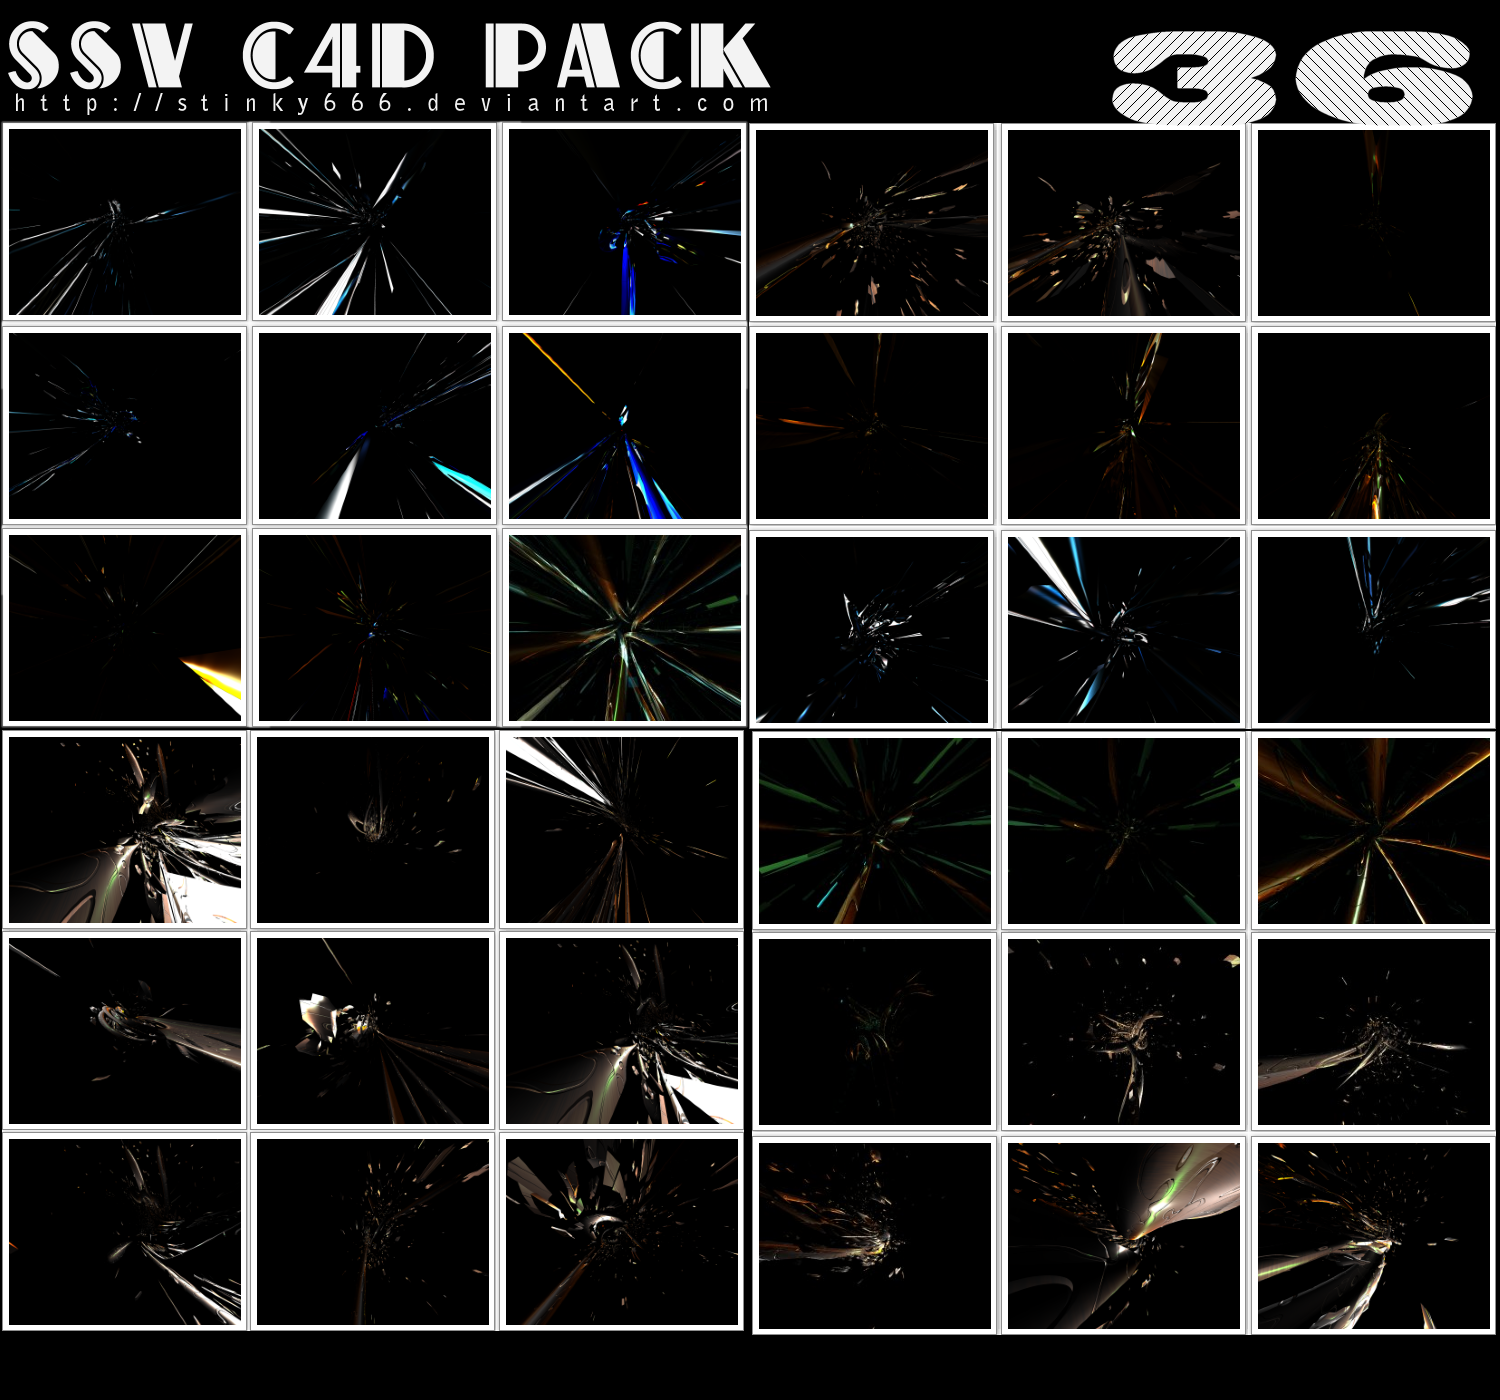 ssv C4D Pack - 36 FREE